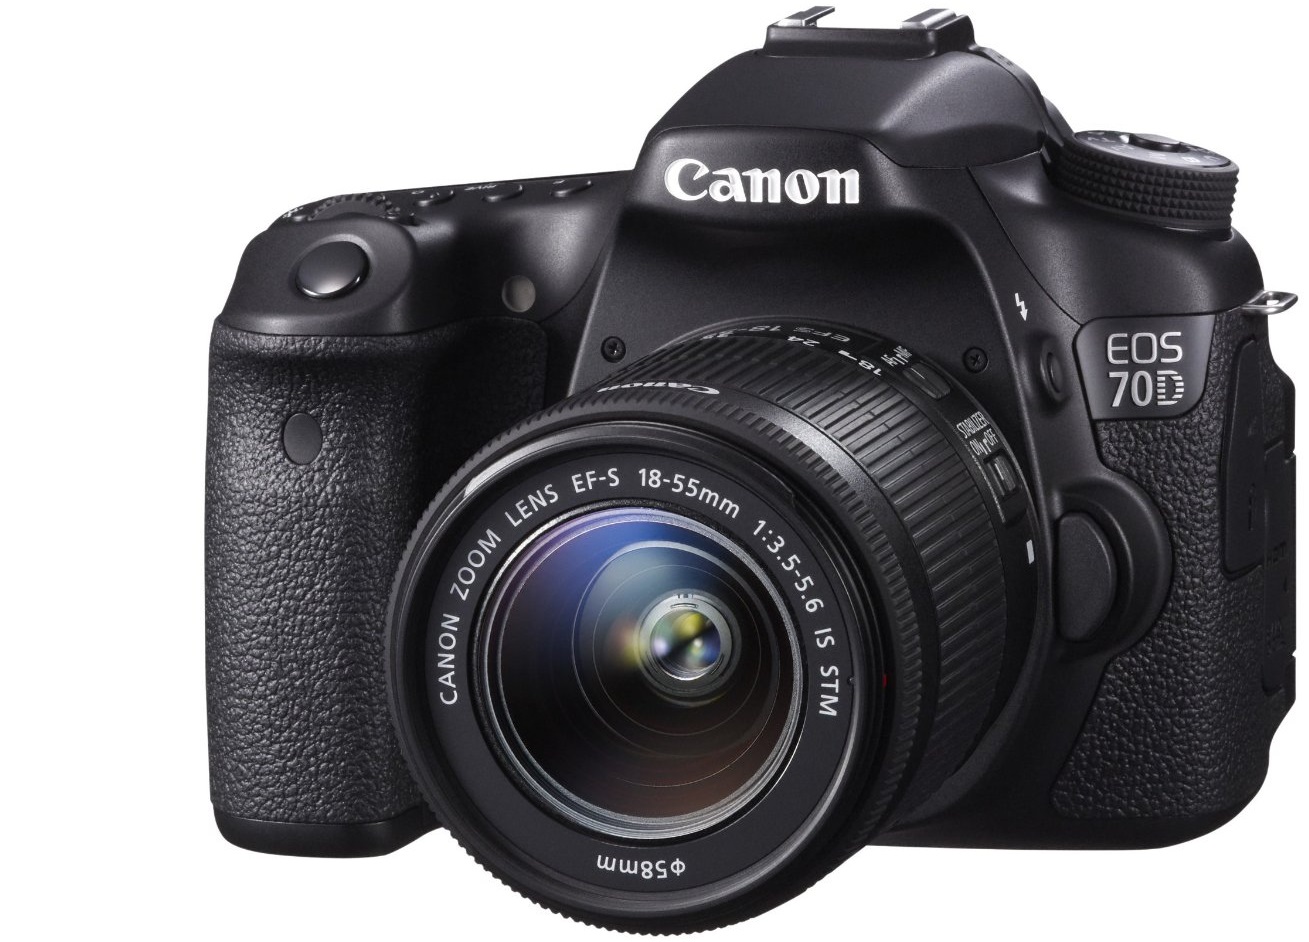 Bild zu SLR-Digitalkamera Canon EOS 70D + EF-S 18-55mm 1:3,5-5,6 IS STM Objektiv für 789€